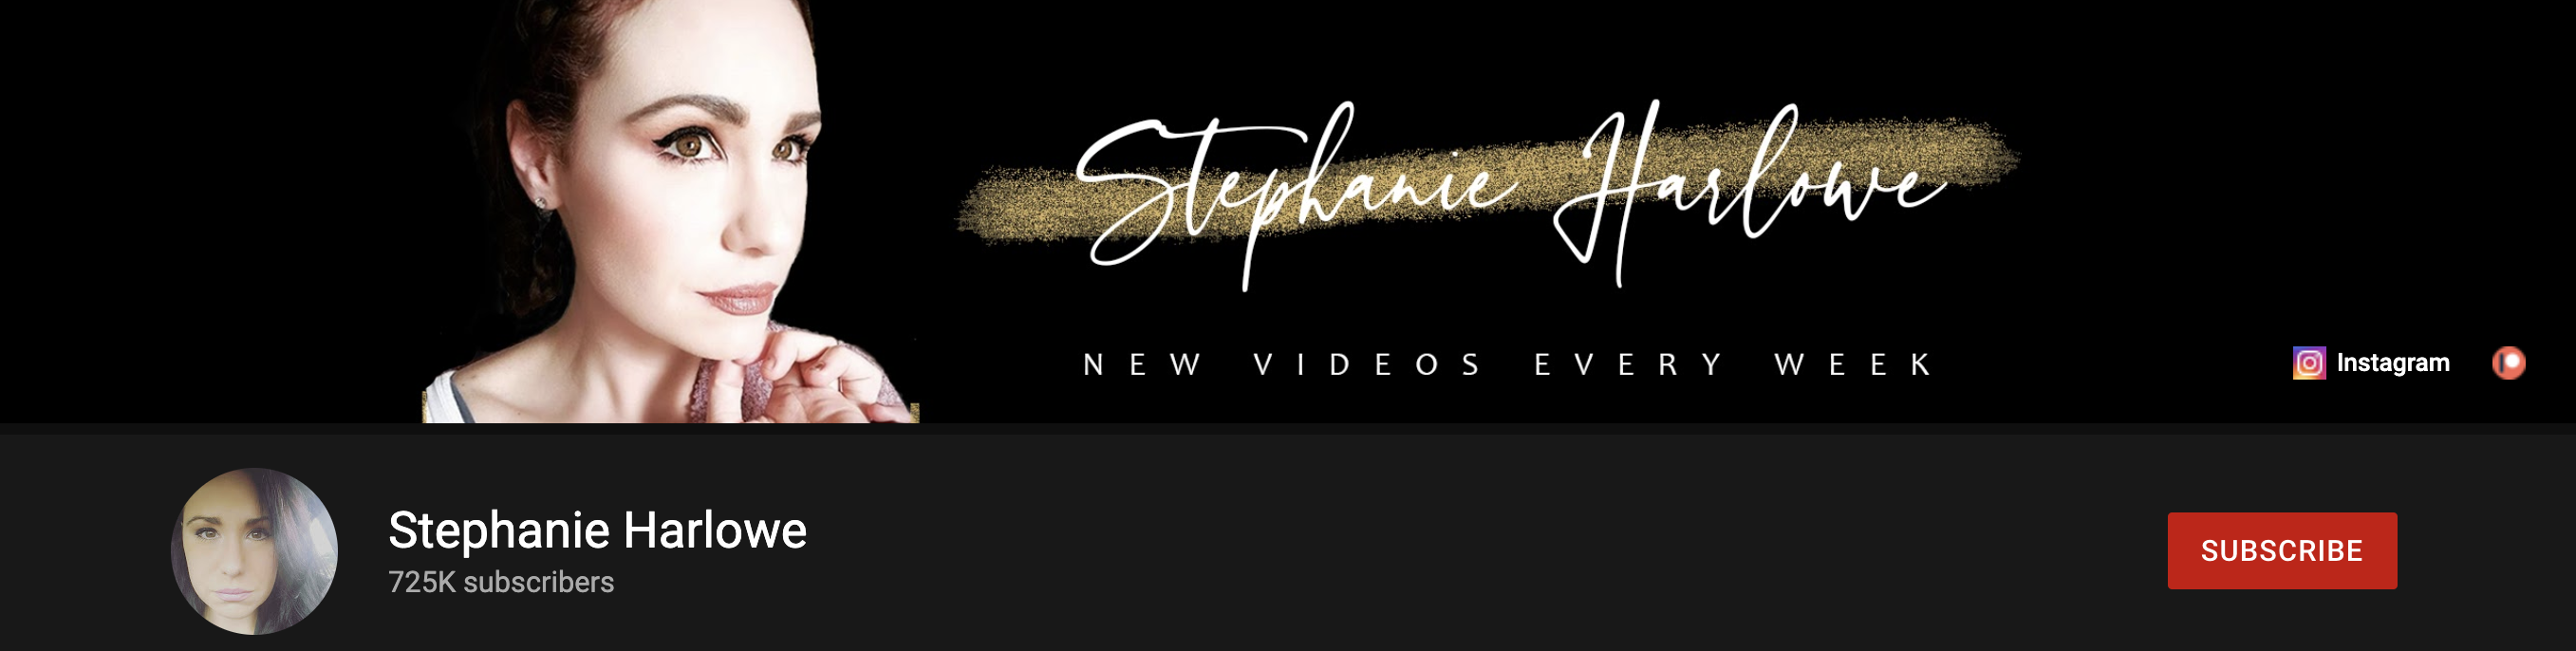 Stephanie Harlowe Youtube Channel